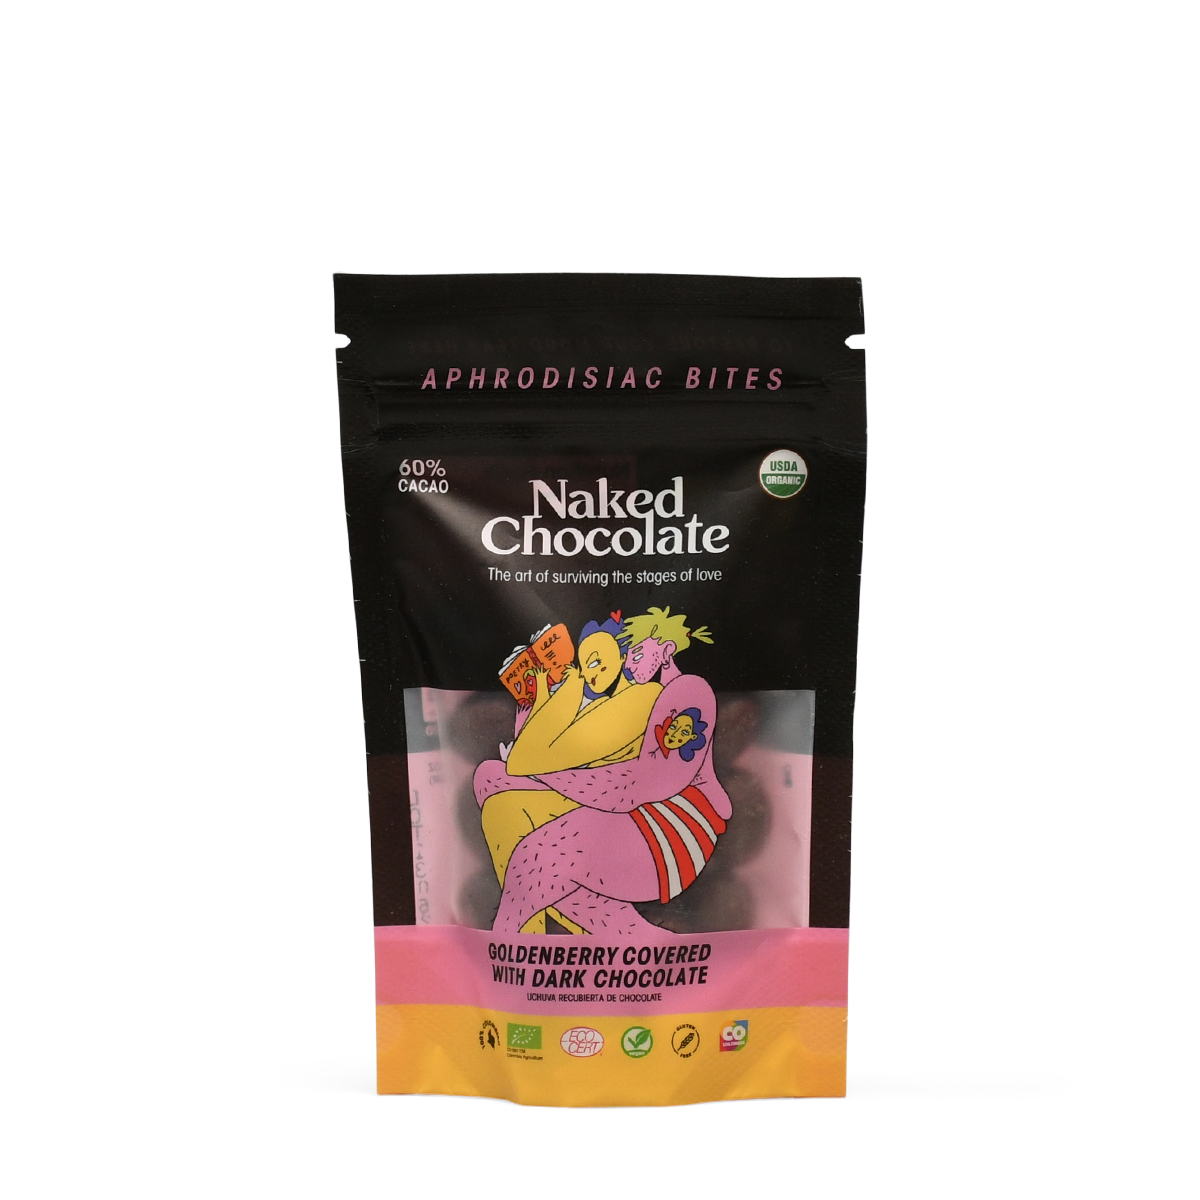 NAKED CHOCOLATE - CRAVING BITES - DARK CHOCOLATE GOLDENBERRY